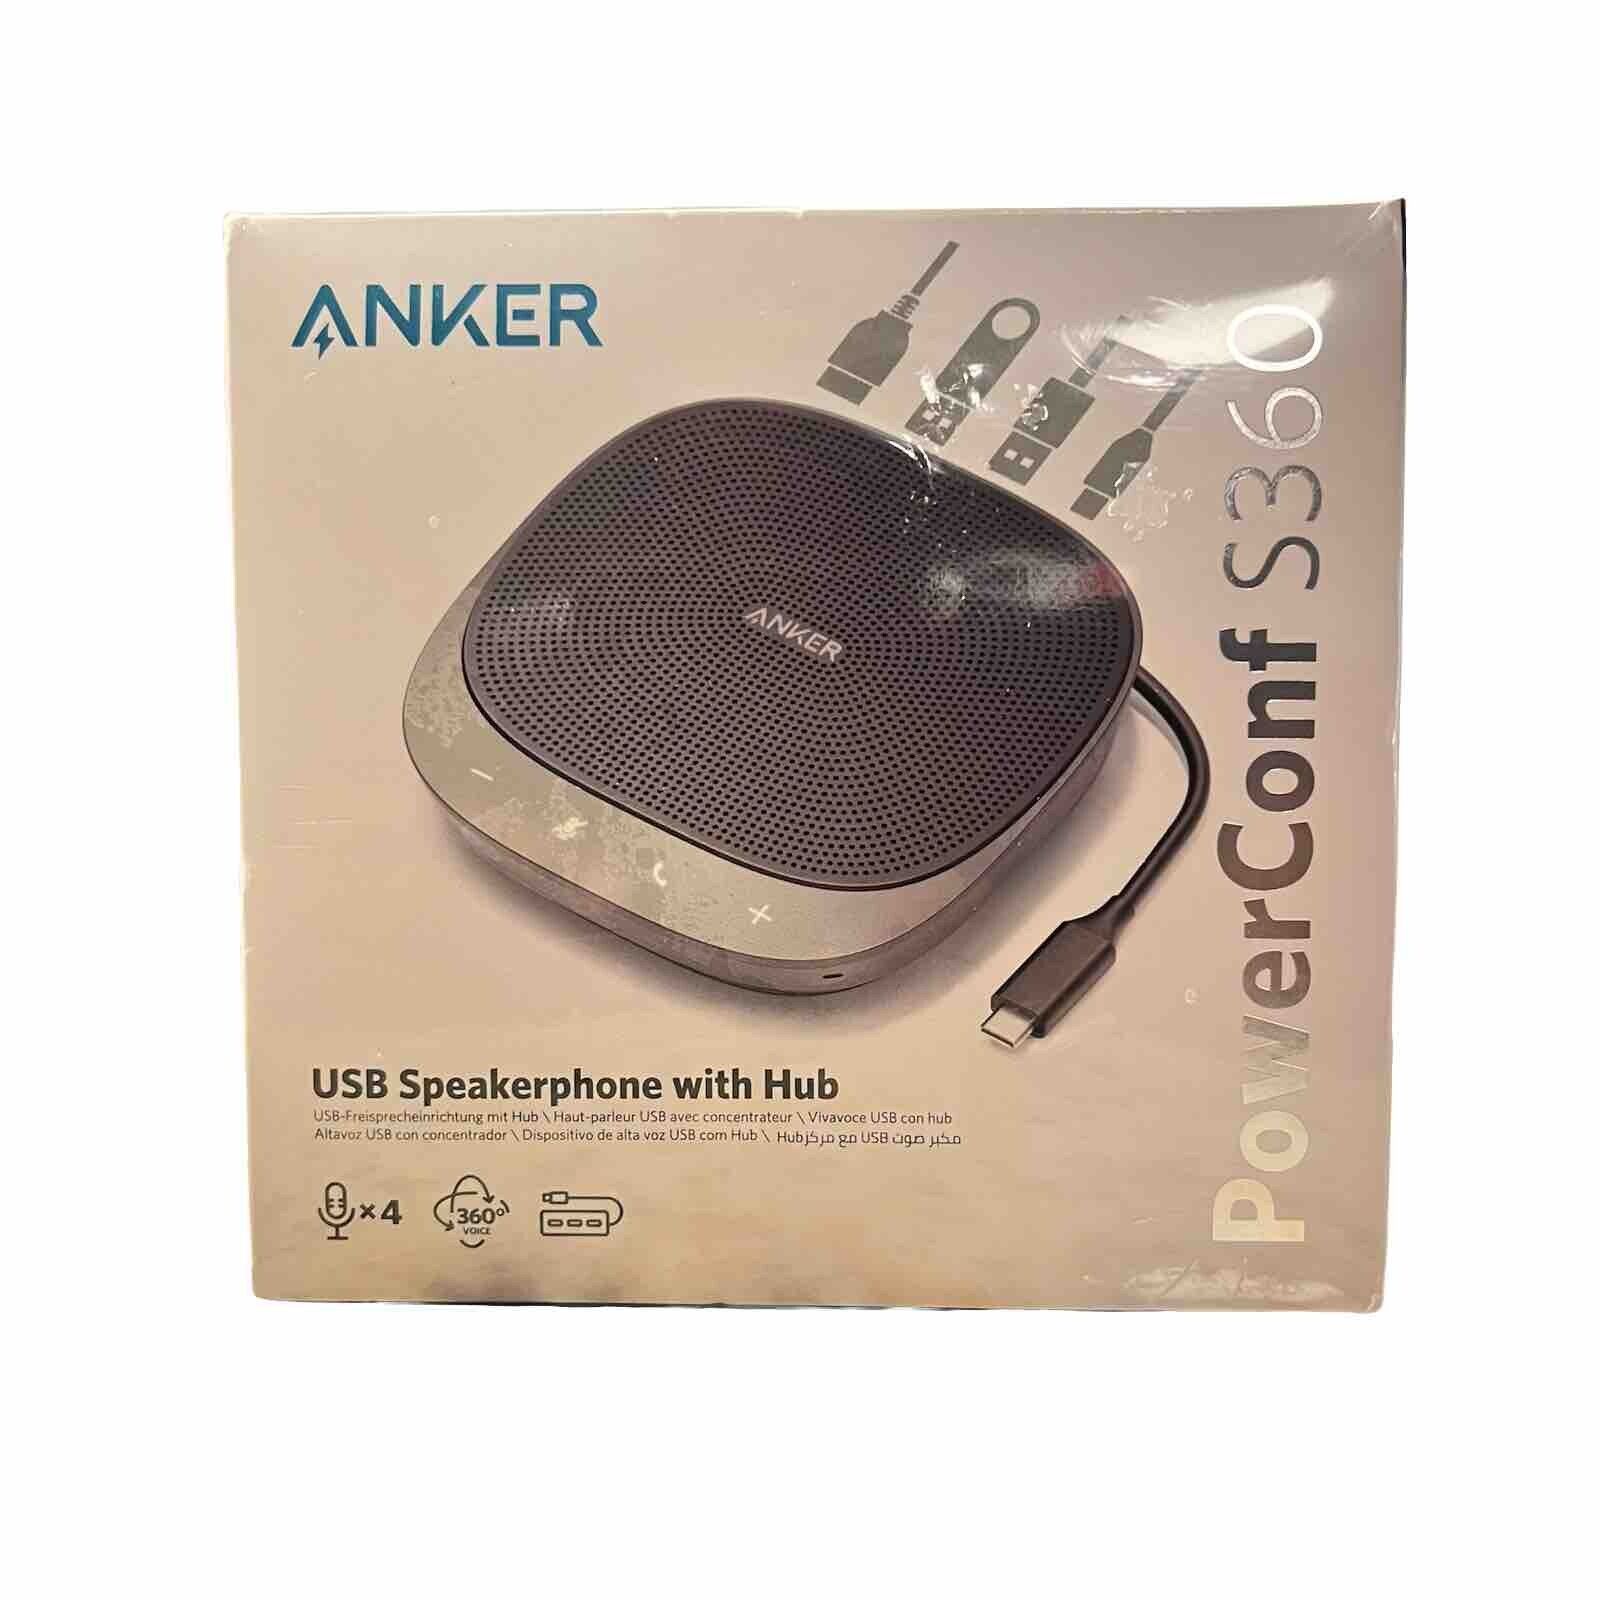 NIB-Anker PowerConf S360 USB Speakerphone with Hub A3307 New Sealed Retail